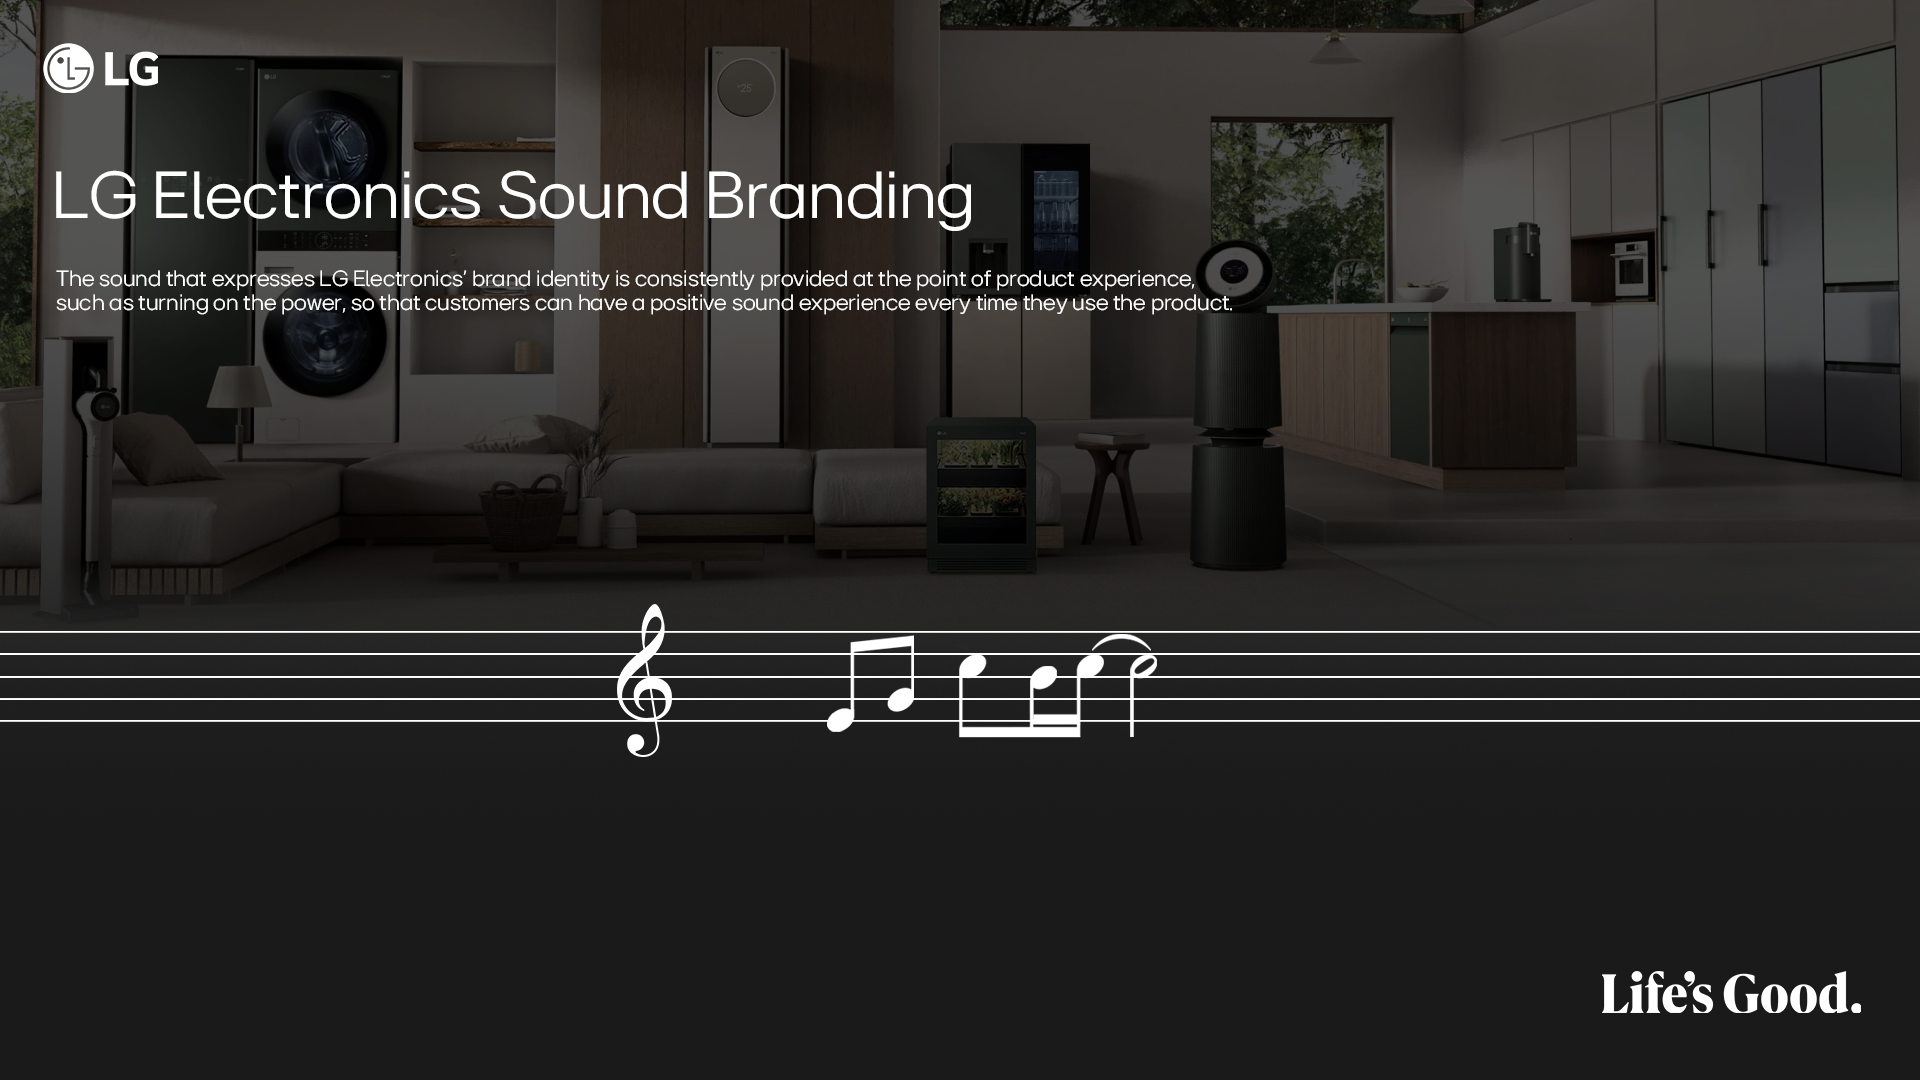 LG Sound UX